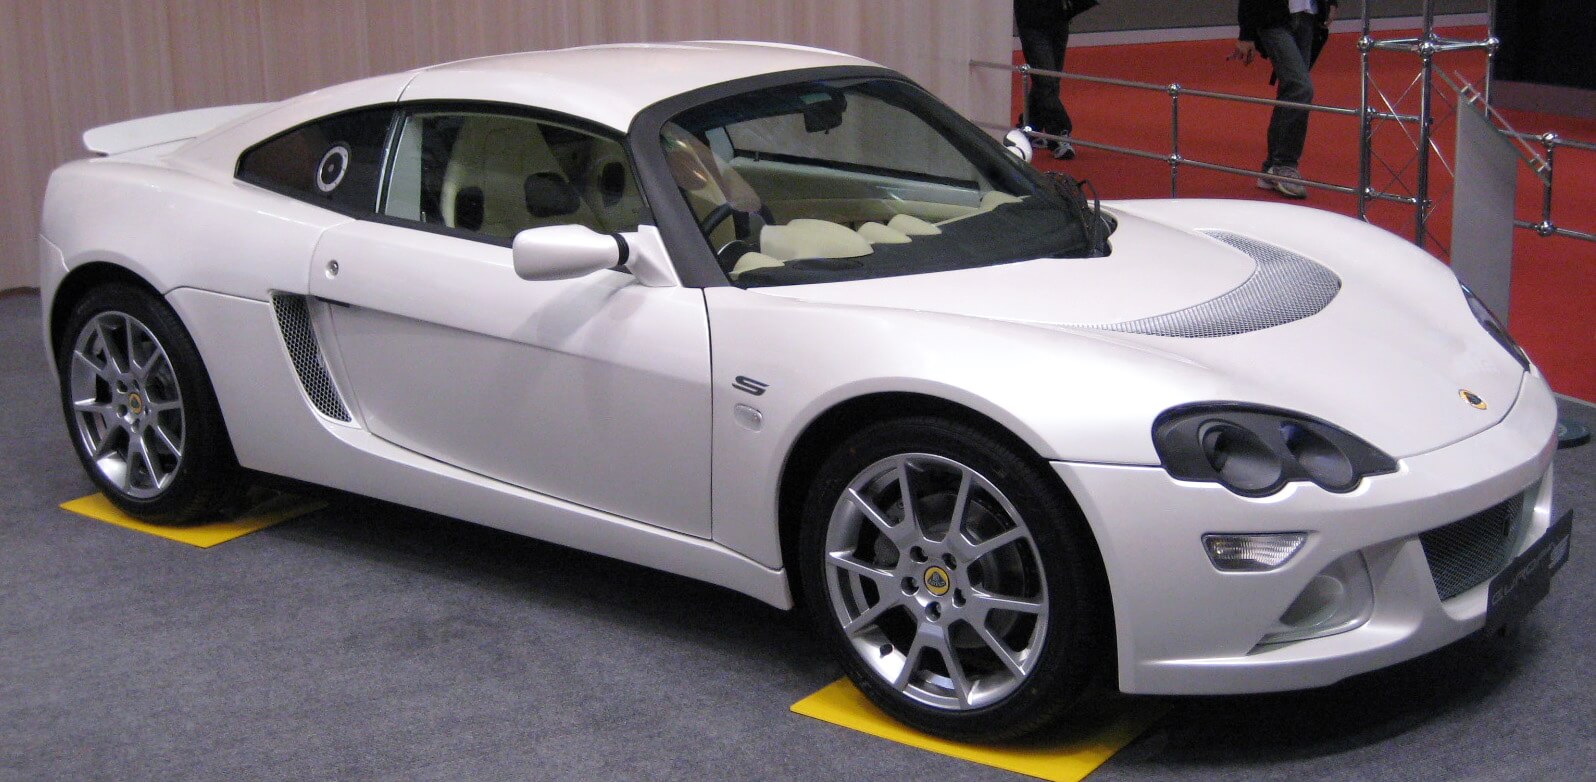 2006 Lotus Europa S